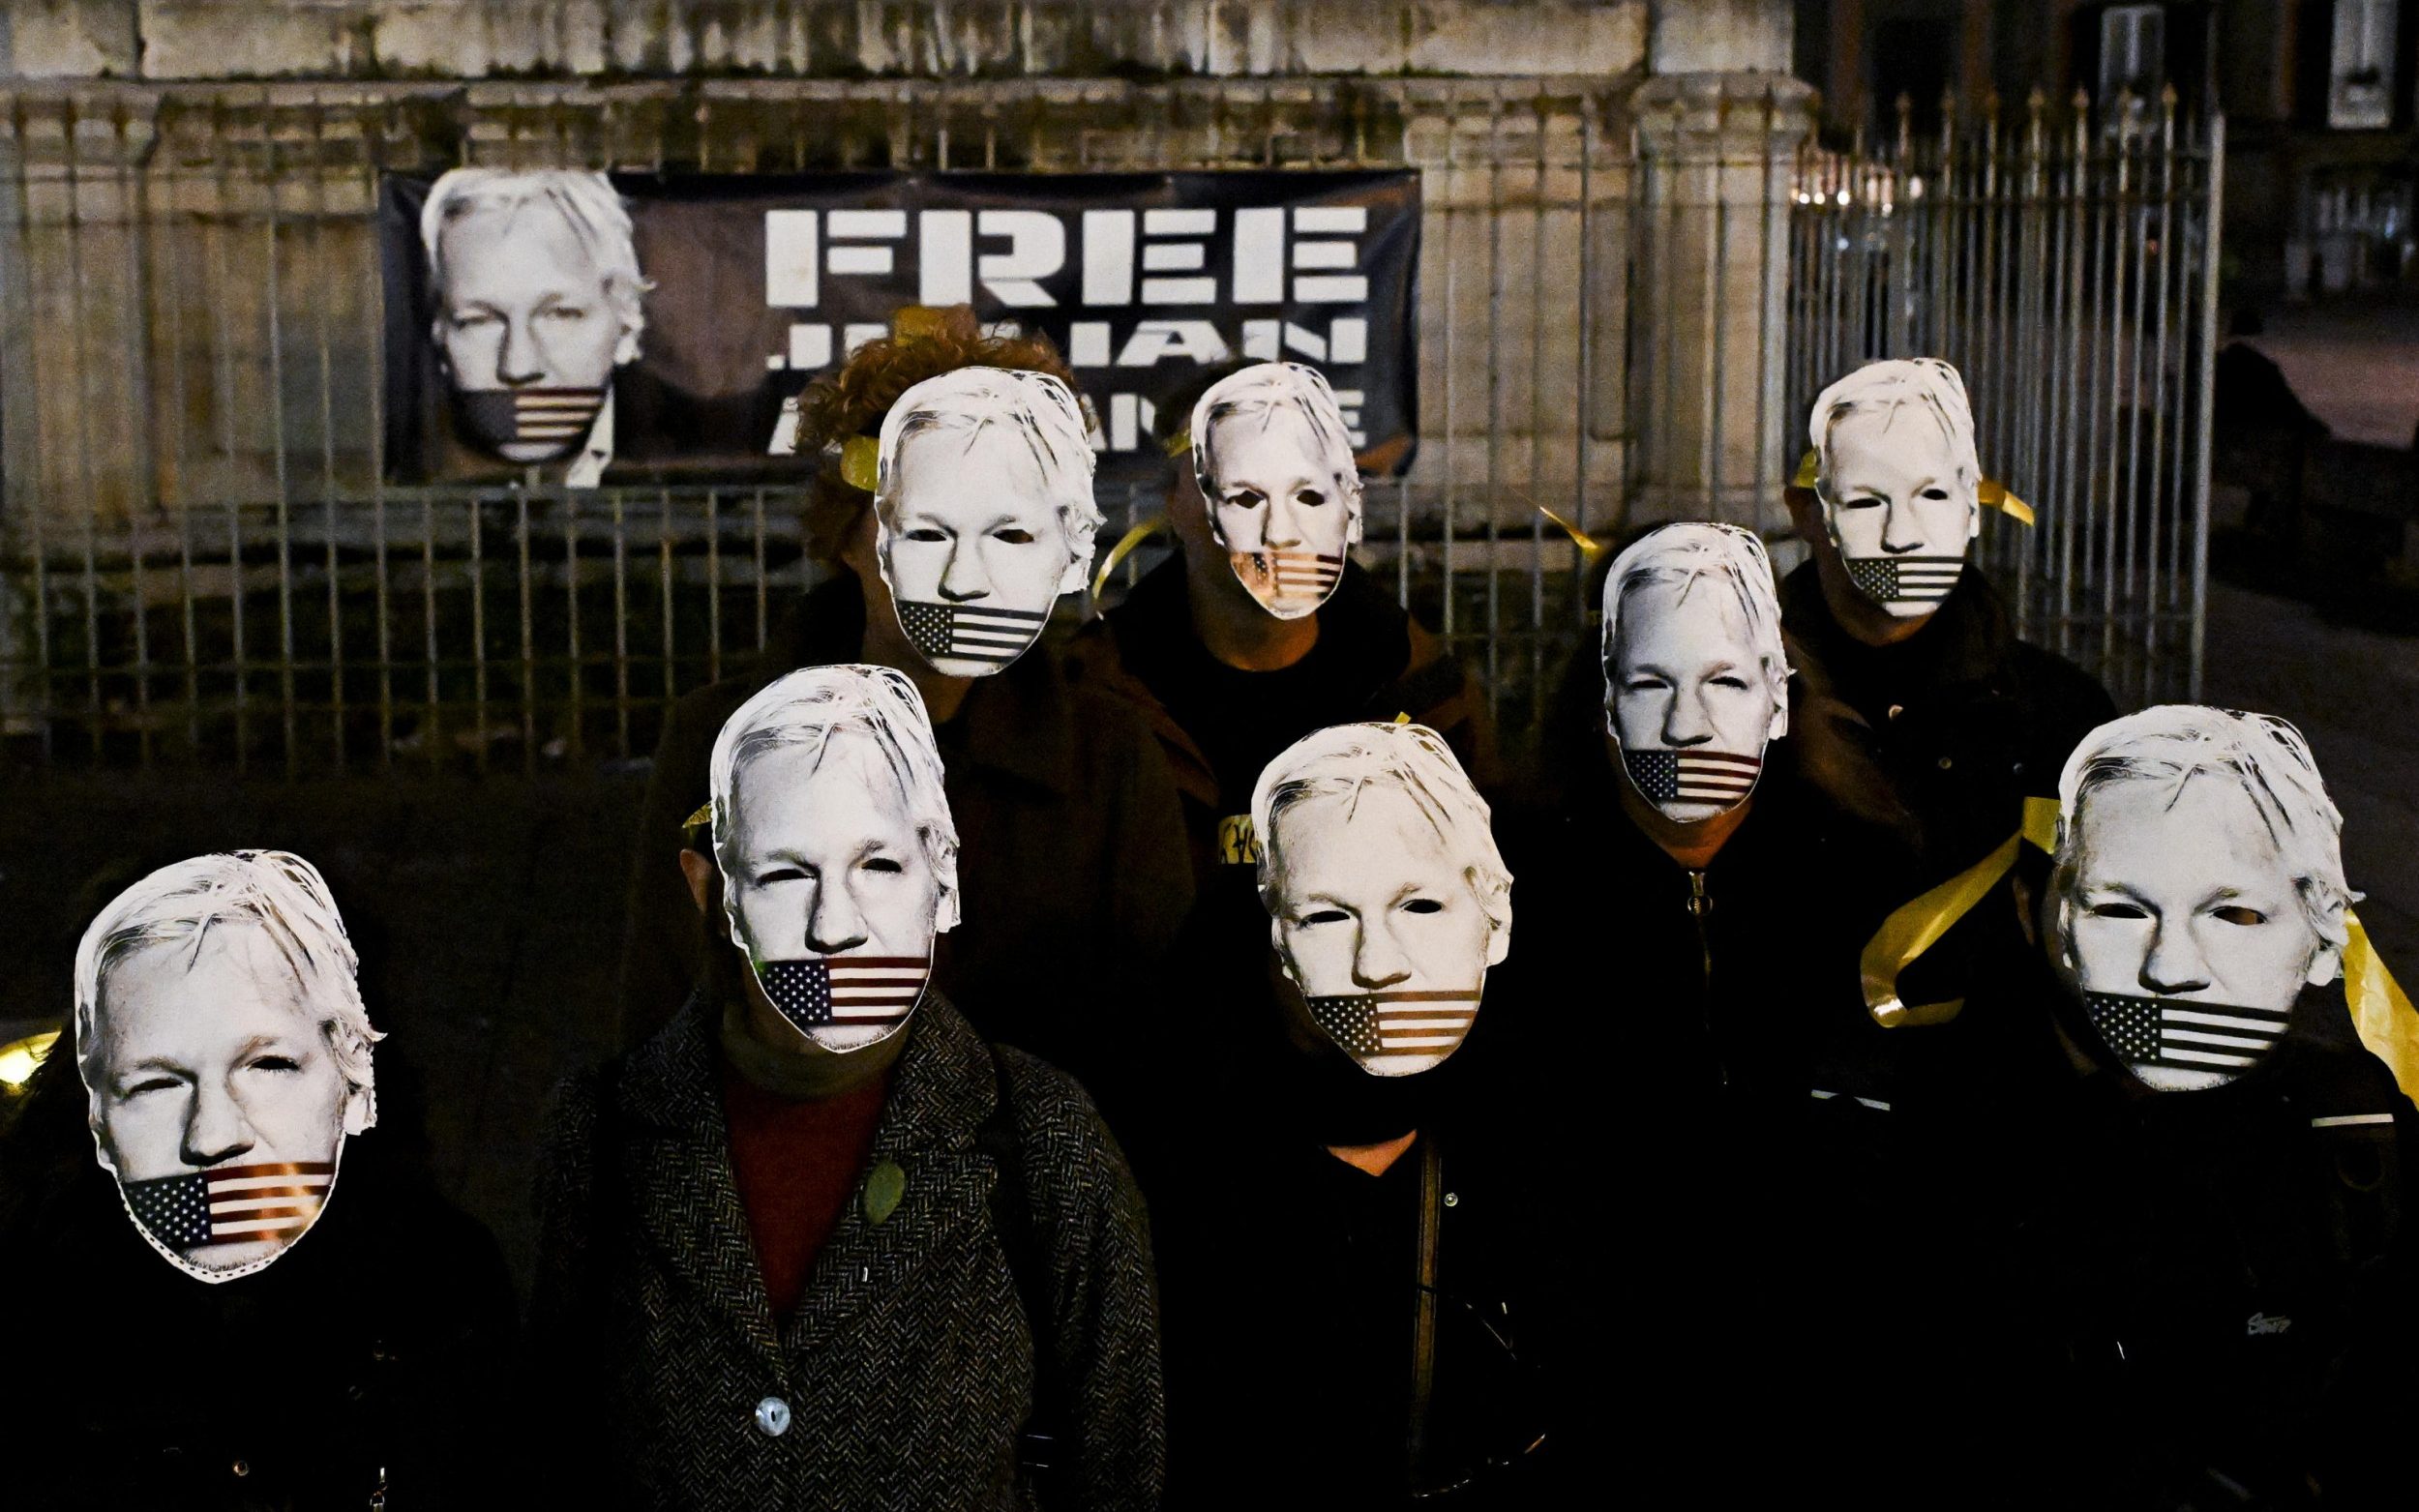 biden ‘considering’ request to drop assange prosecution